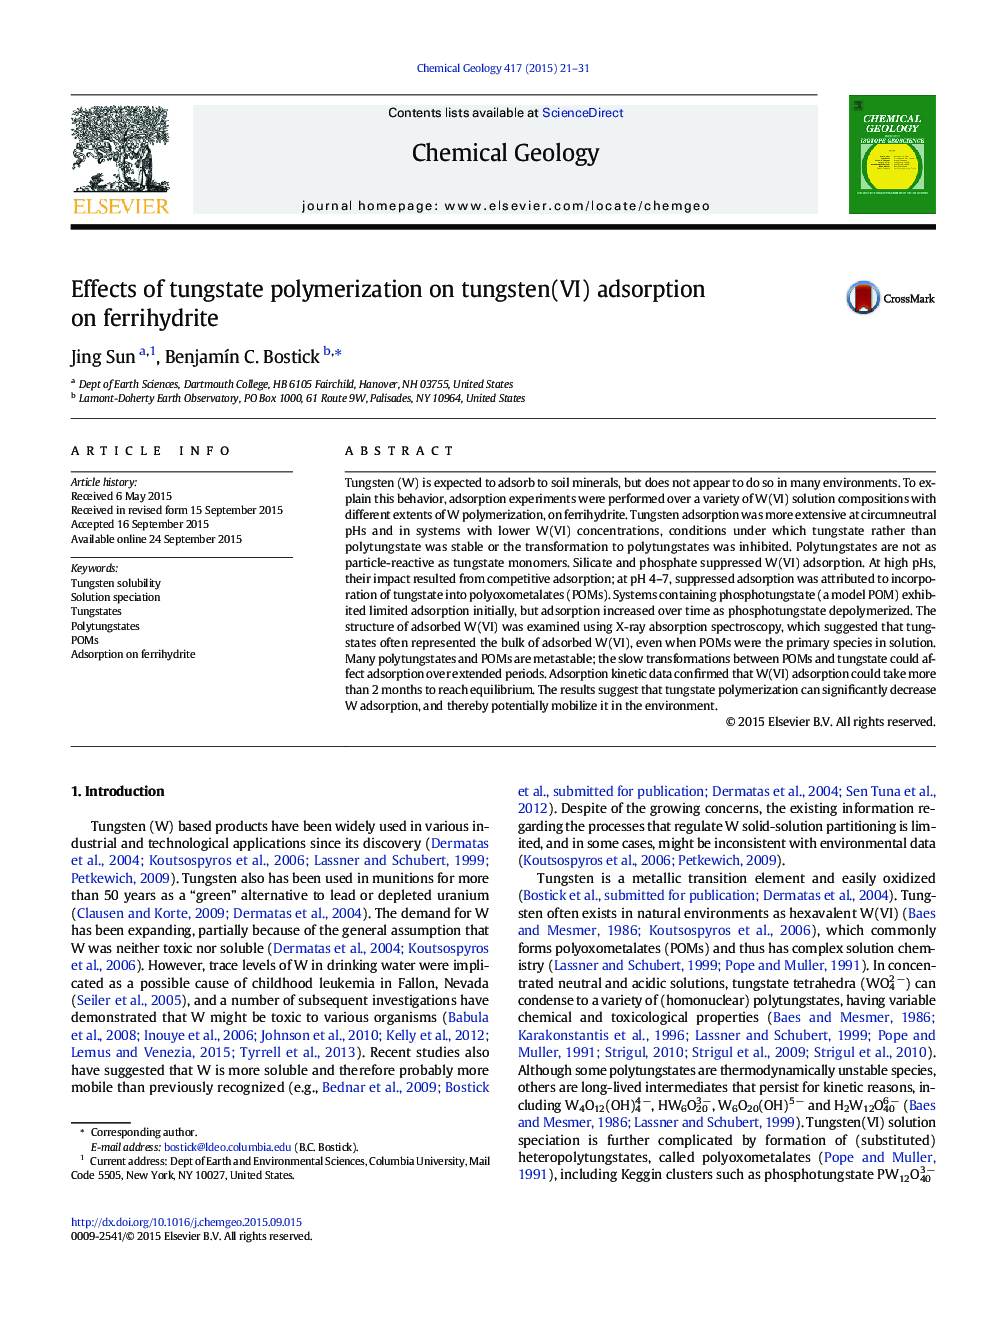 Effects of tungstate polymerization on tungsten(VI) adsorption on ferrihydrite